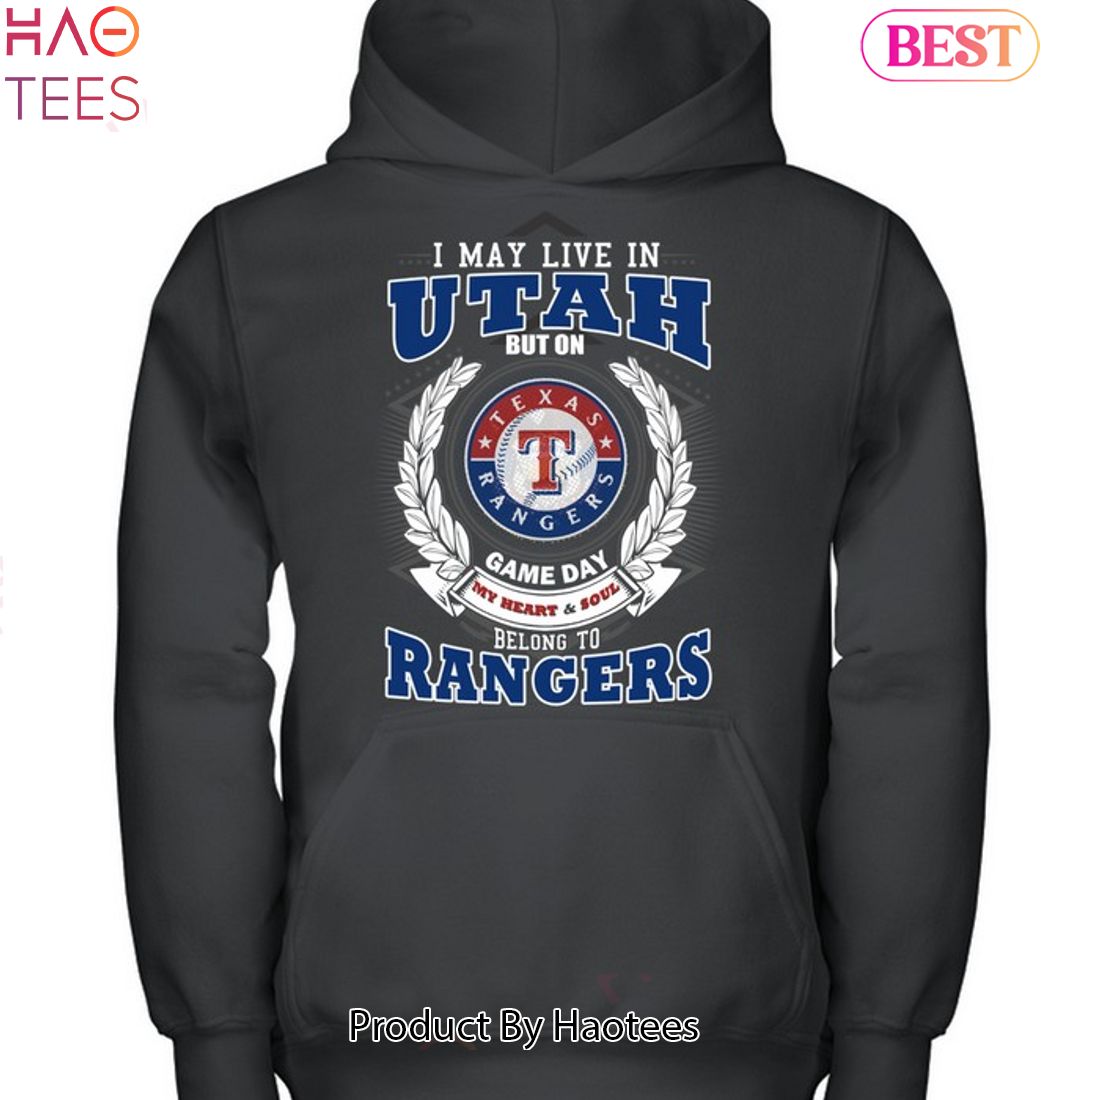 My heart Texas rangers team shirt, hoodie, sweatshirt for men and women